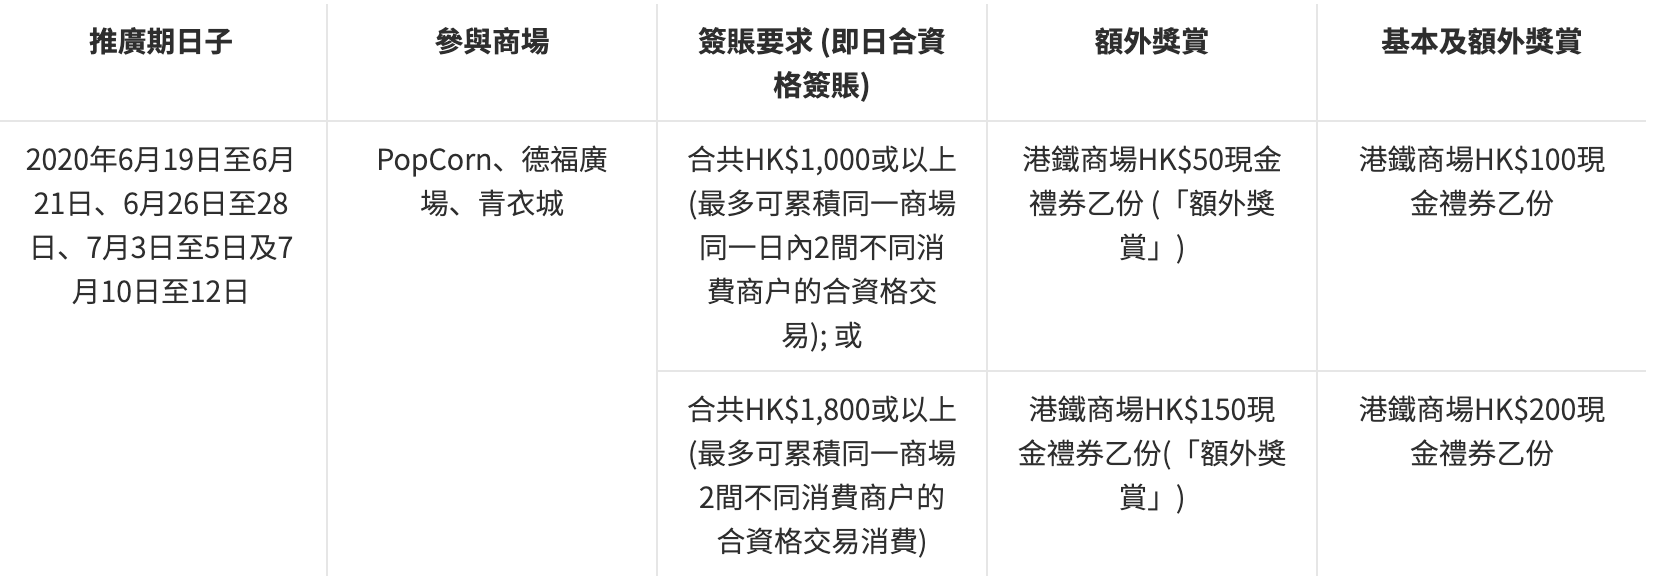 【DBS限時商場優惠】青衣城、德福、PopCorn指定日子簽賬賺HK$200現金禮券 Popcorn免費泊車優惠